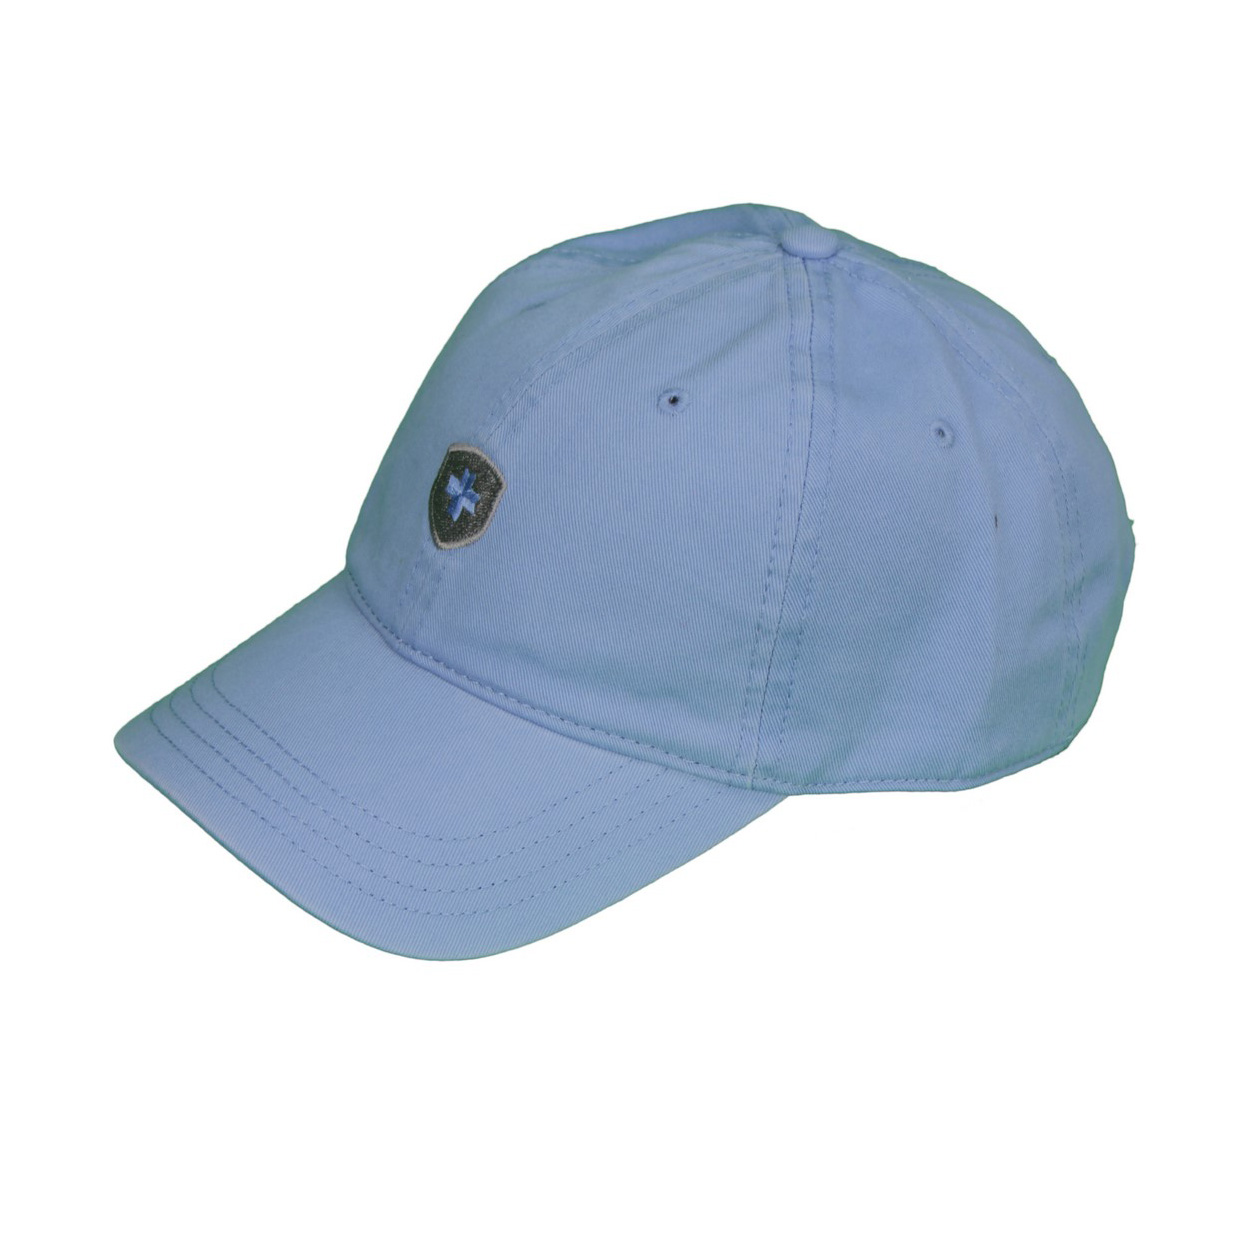 Wellensteyn Baseball Cap Kappe blau PBSC 198 pastell blue